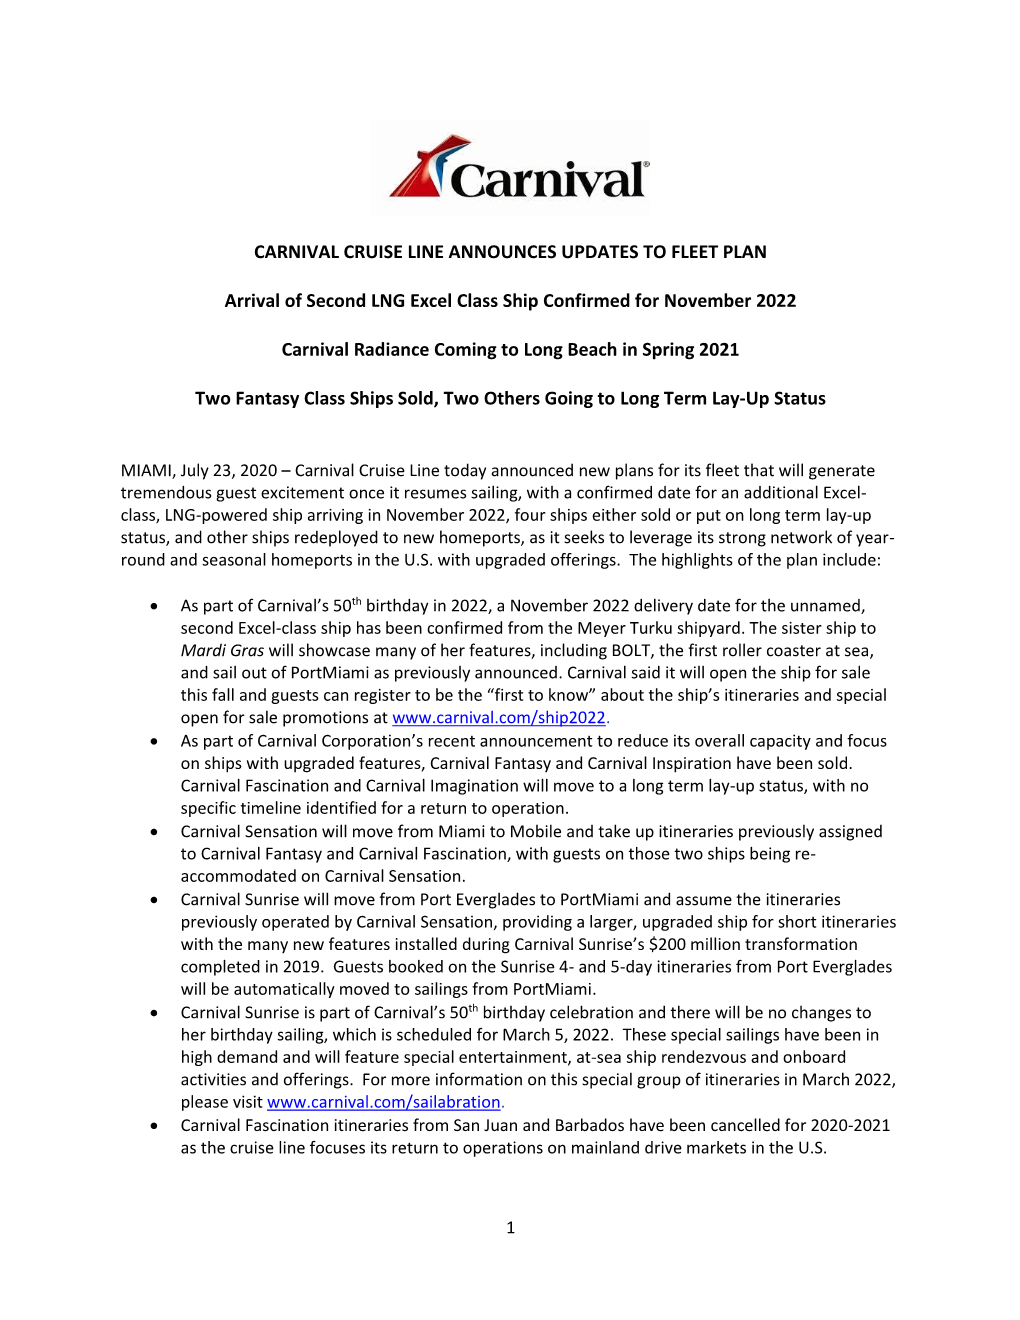 Carnival Cruise Line Announces Updates to Fleet Plan